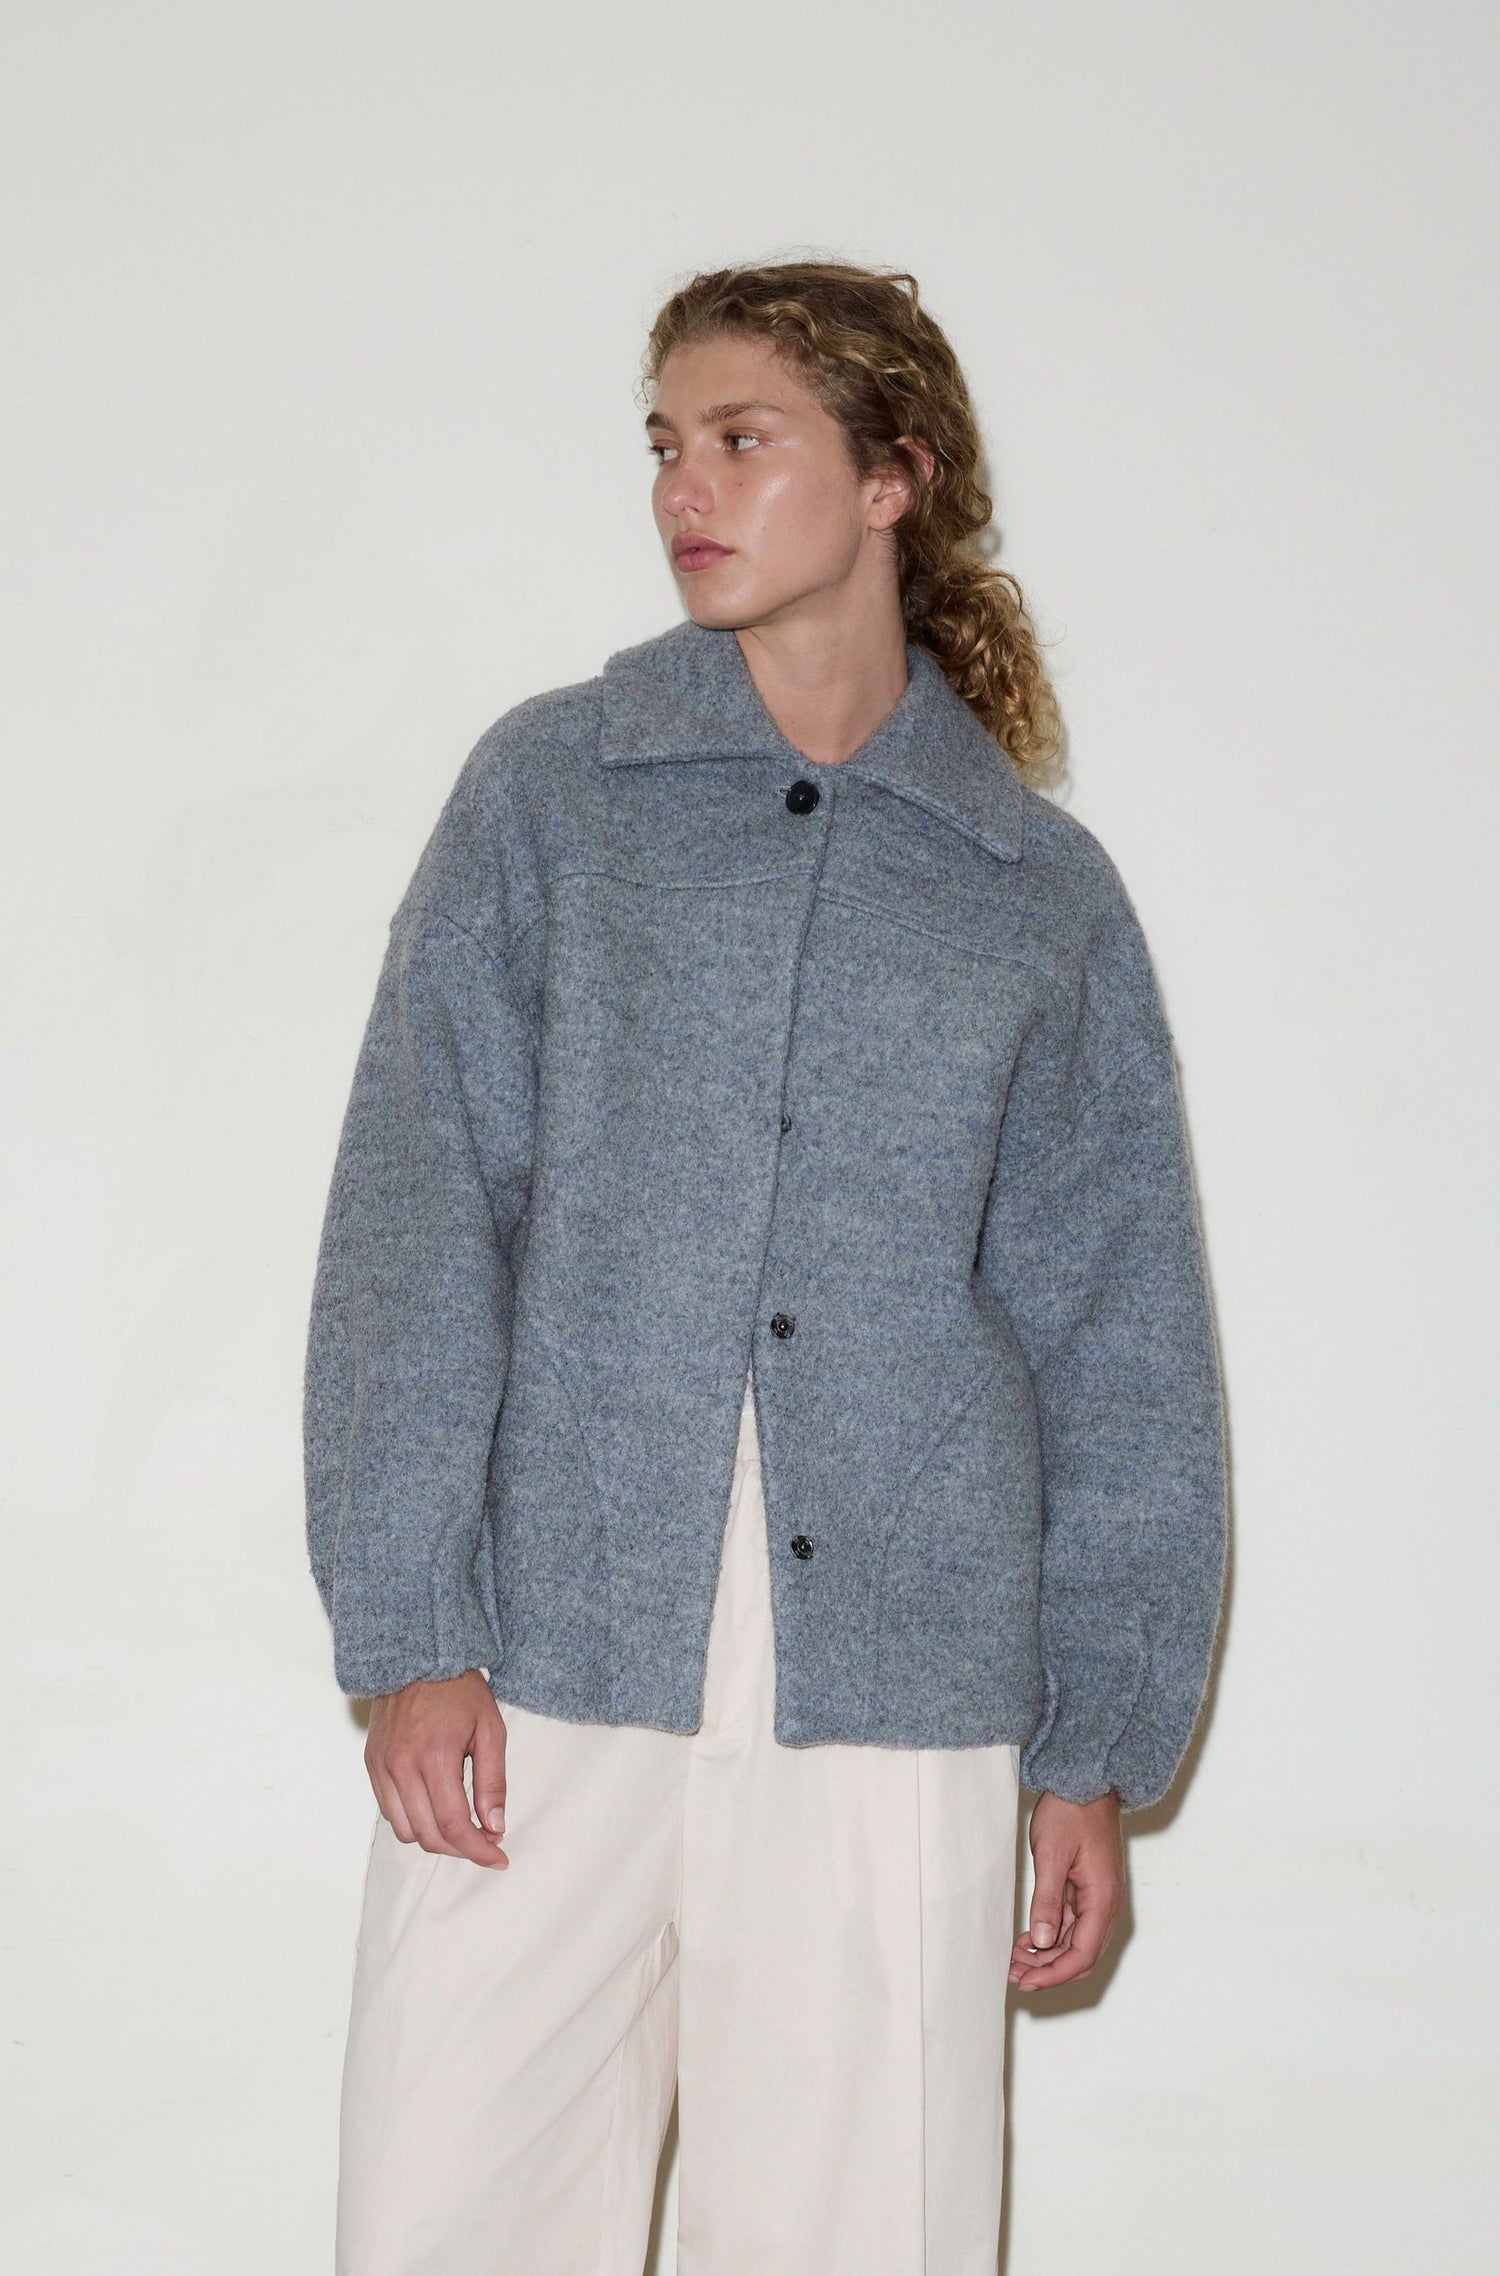 Female model wearing Boiled Wool Coat - Blue Grey by Deiji Studios against plain background